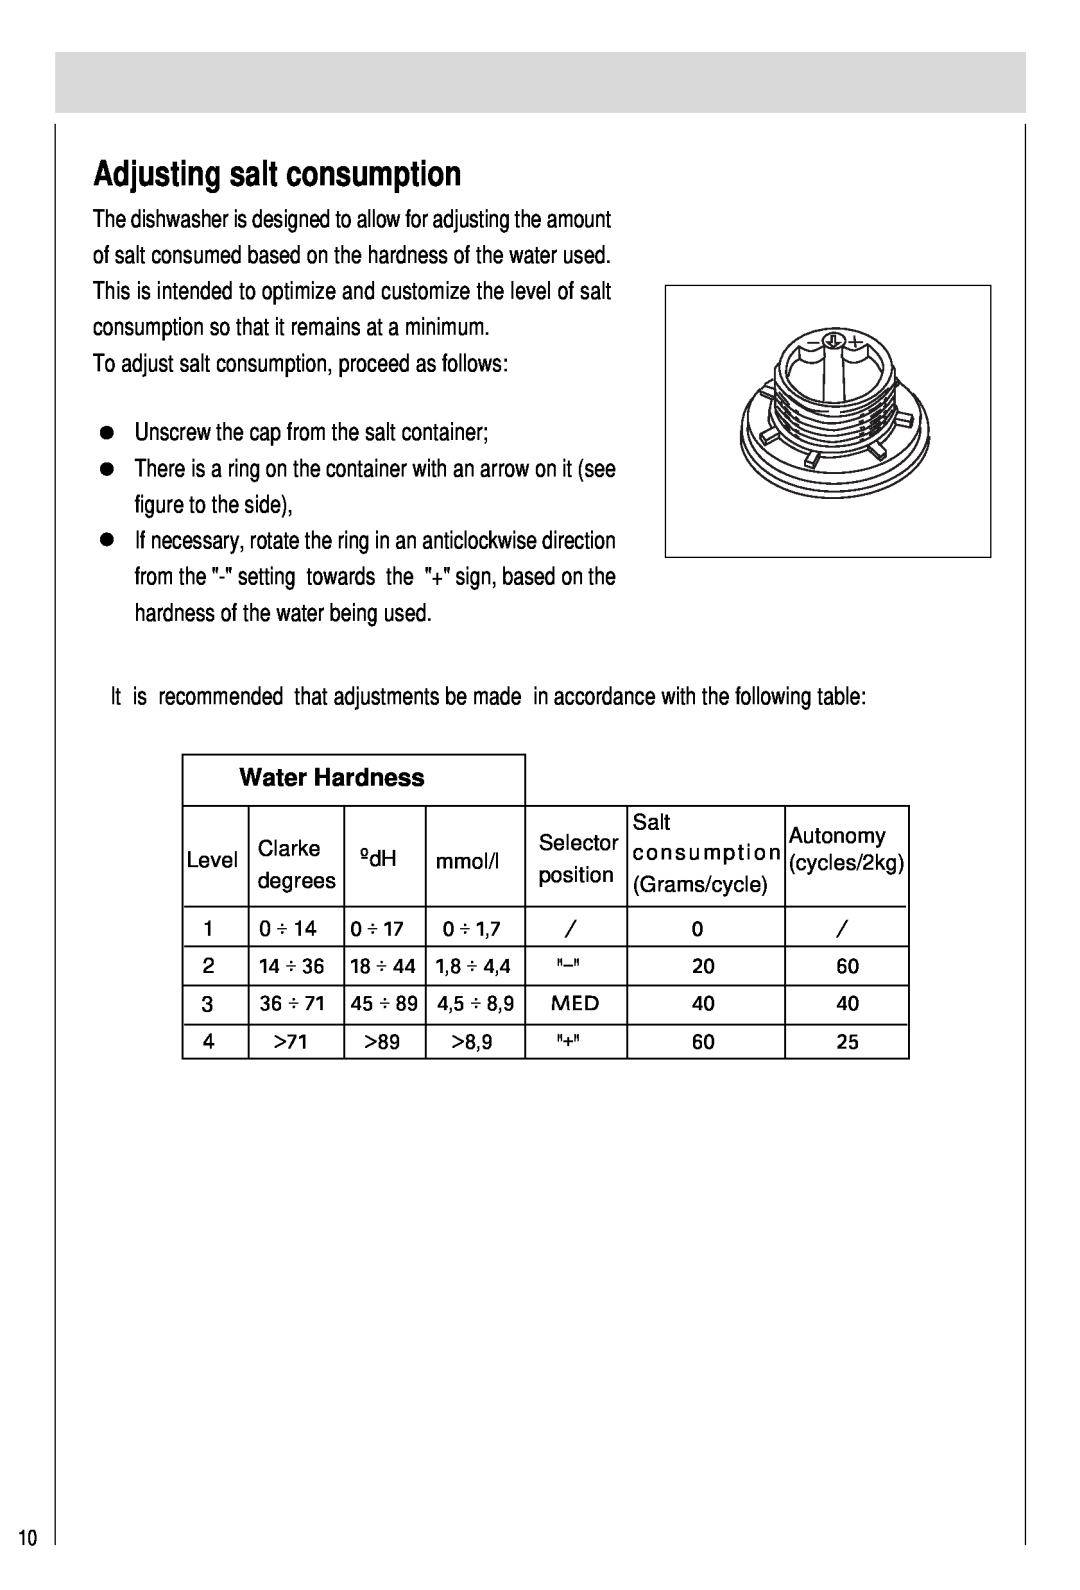 Haier DW15-PFE2 Adjusting salt consumption, Water Hardness, º dH, Selector, Salt, Autonomy, Level, Clarke, mmol/l, degrees 